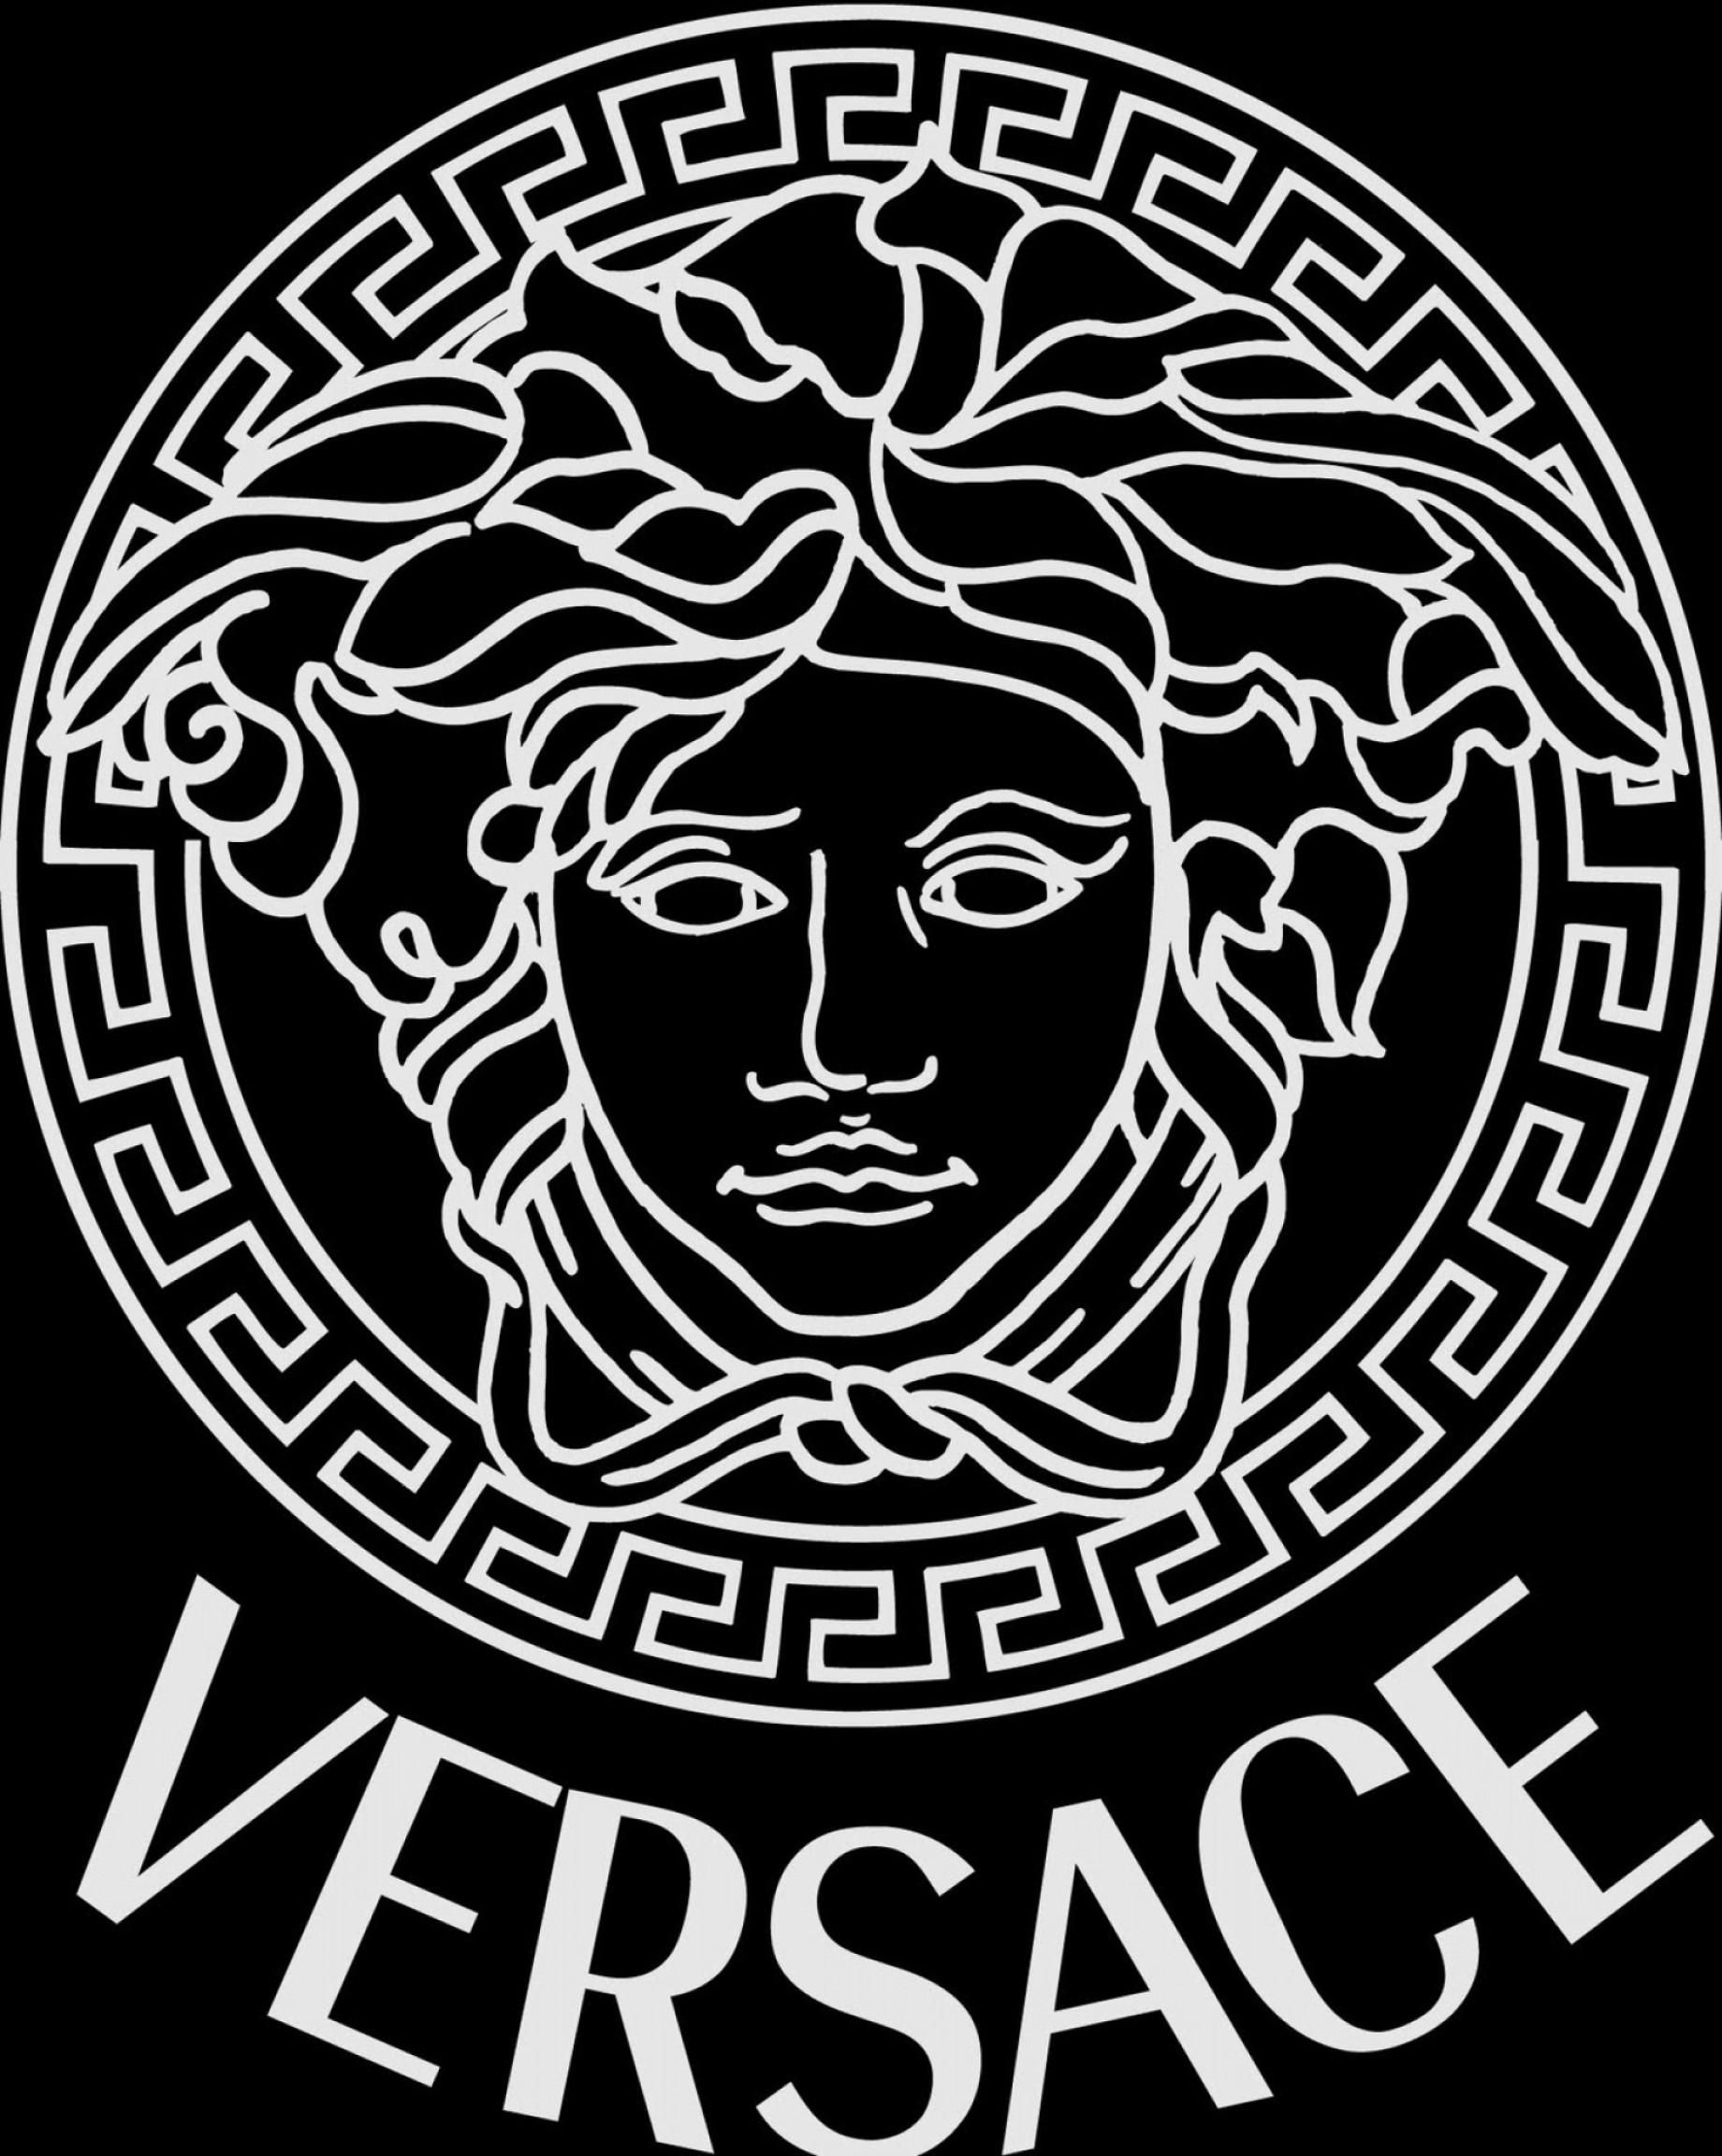 versace logo wallpaper hd